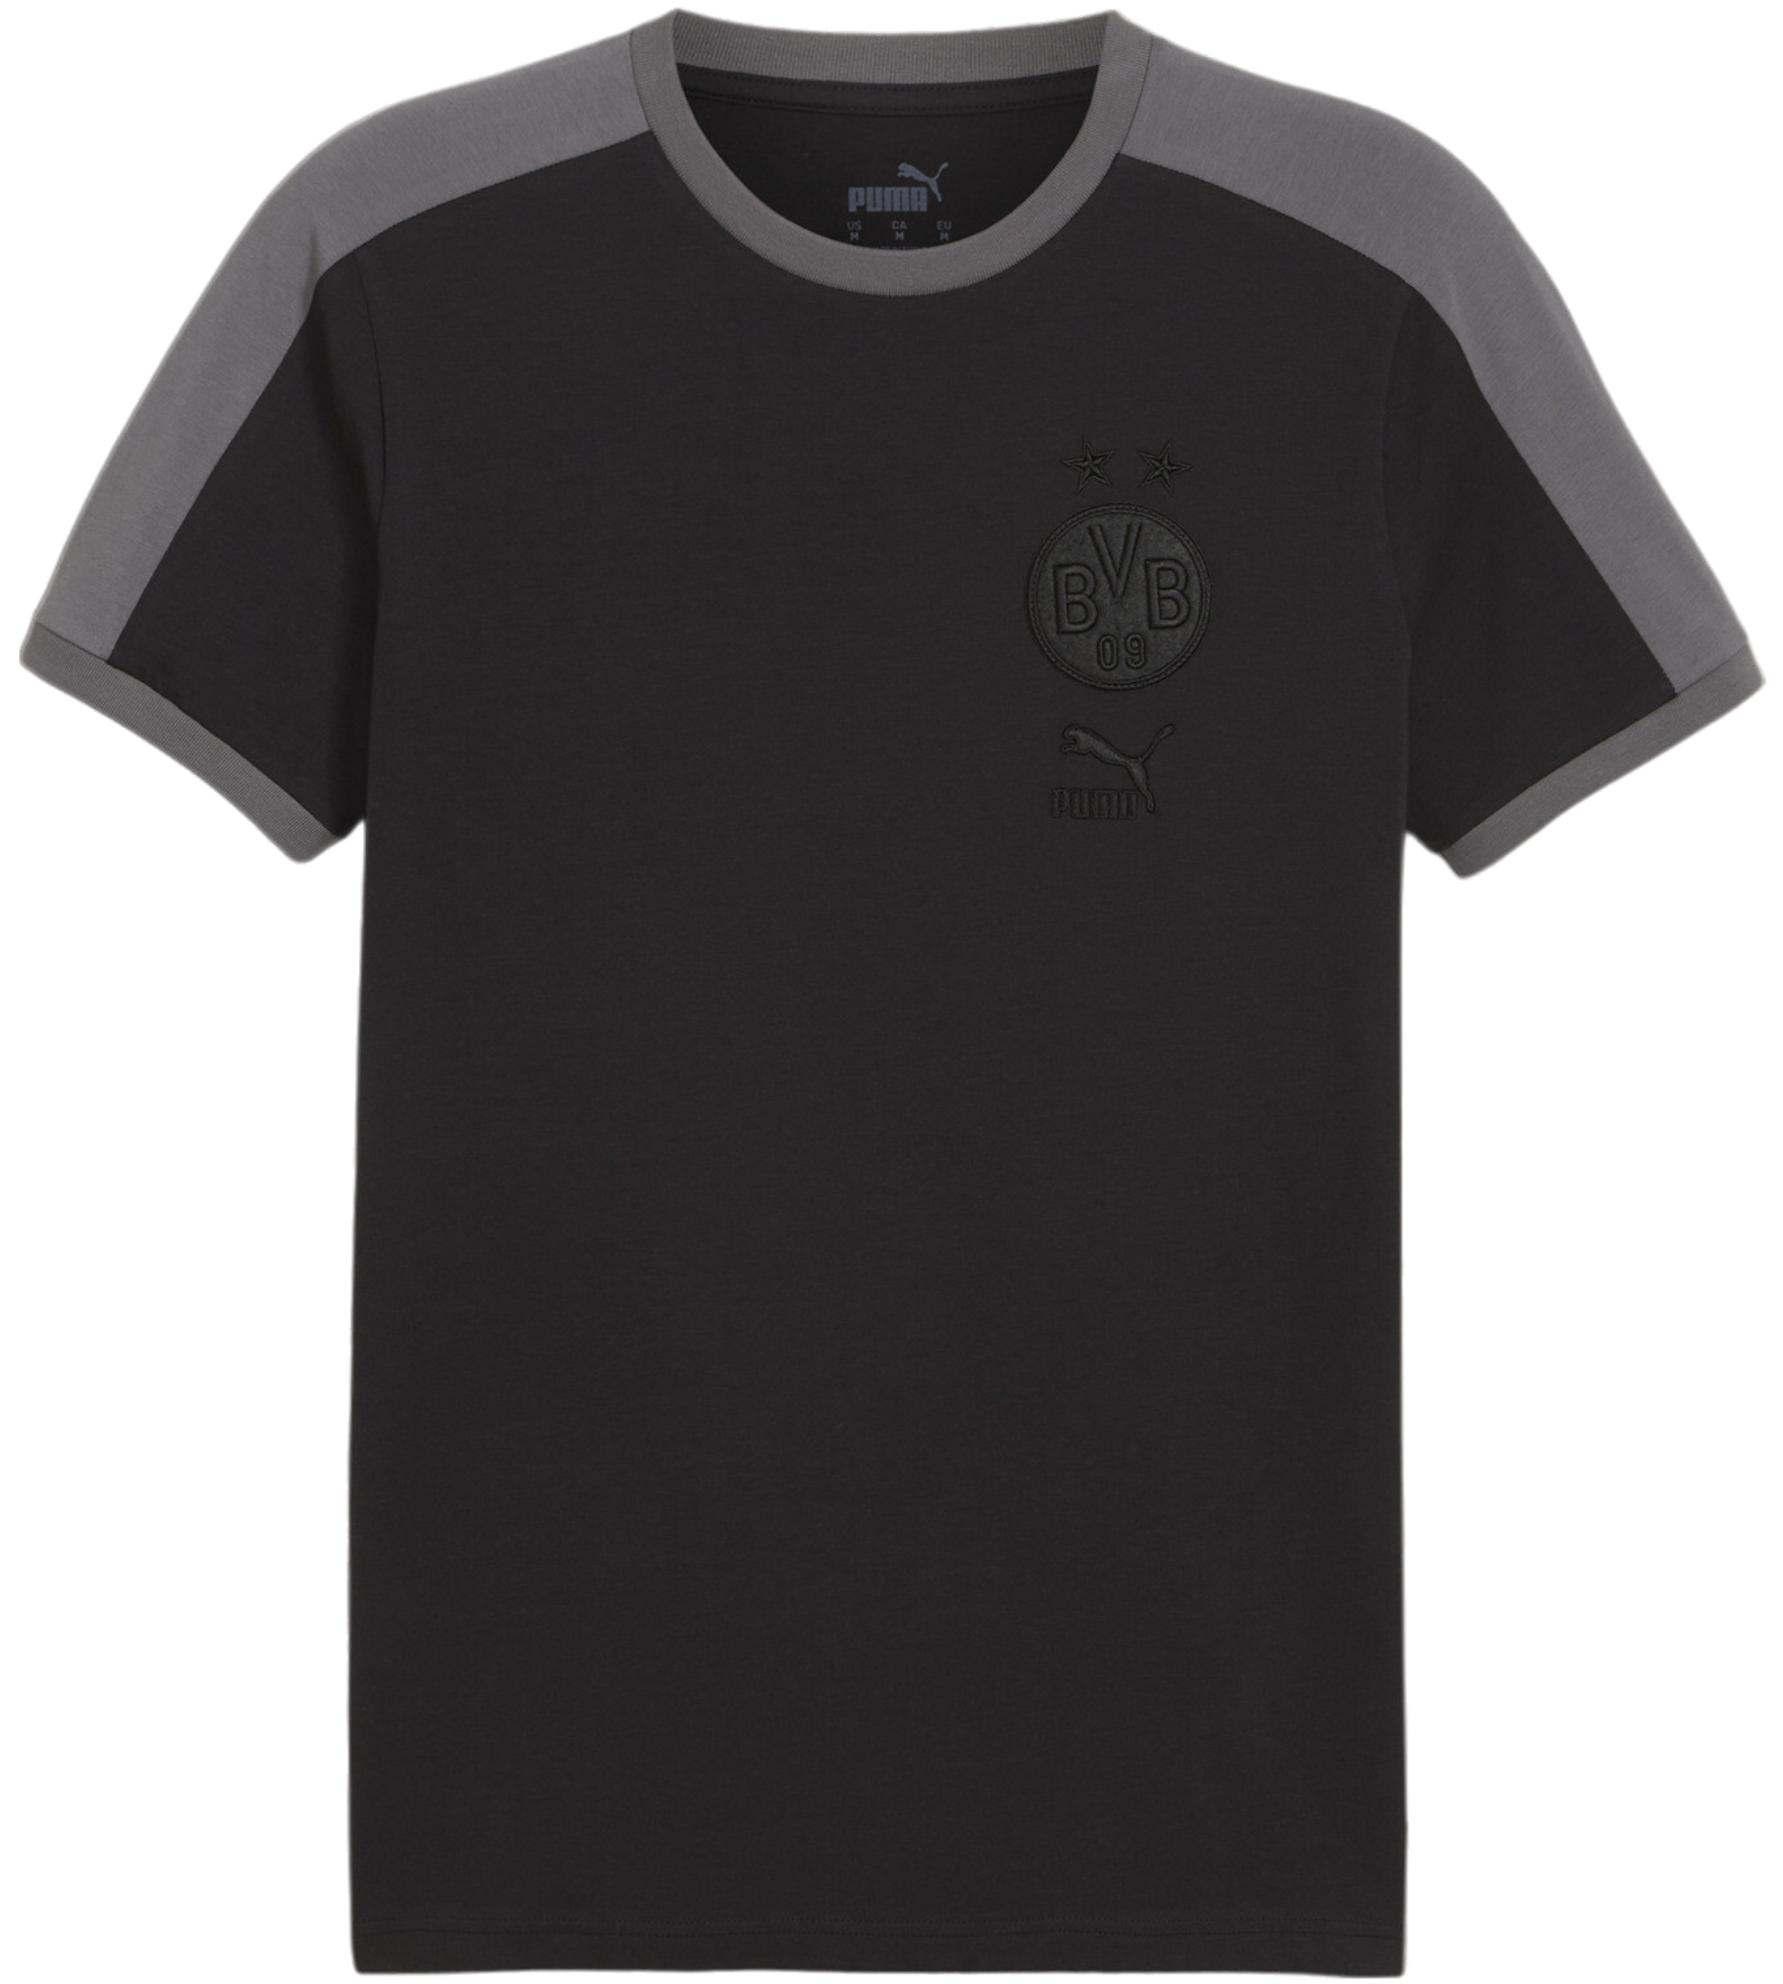 T-shirt Puma Borussia Dortmund ftblHeritage T7 Tee Men